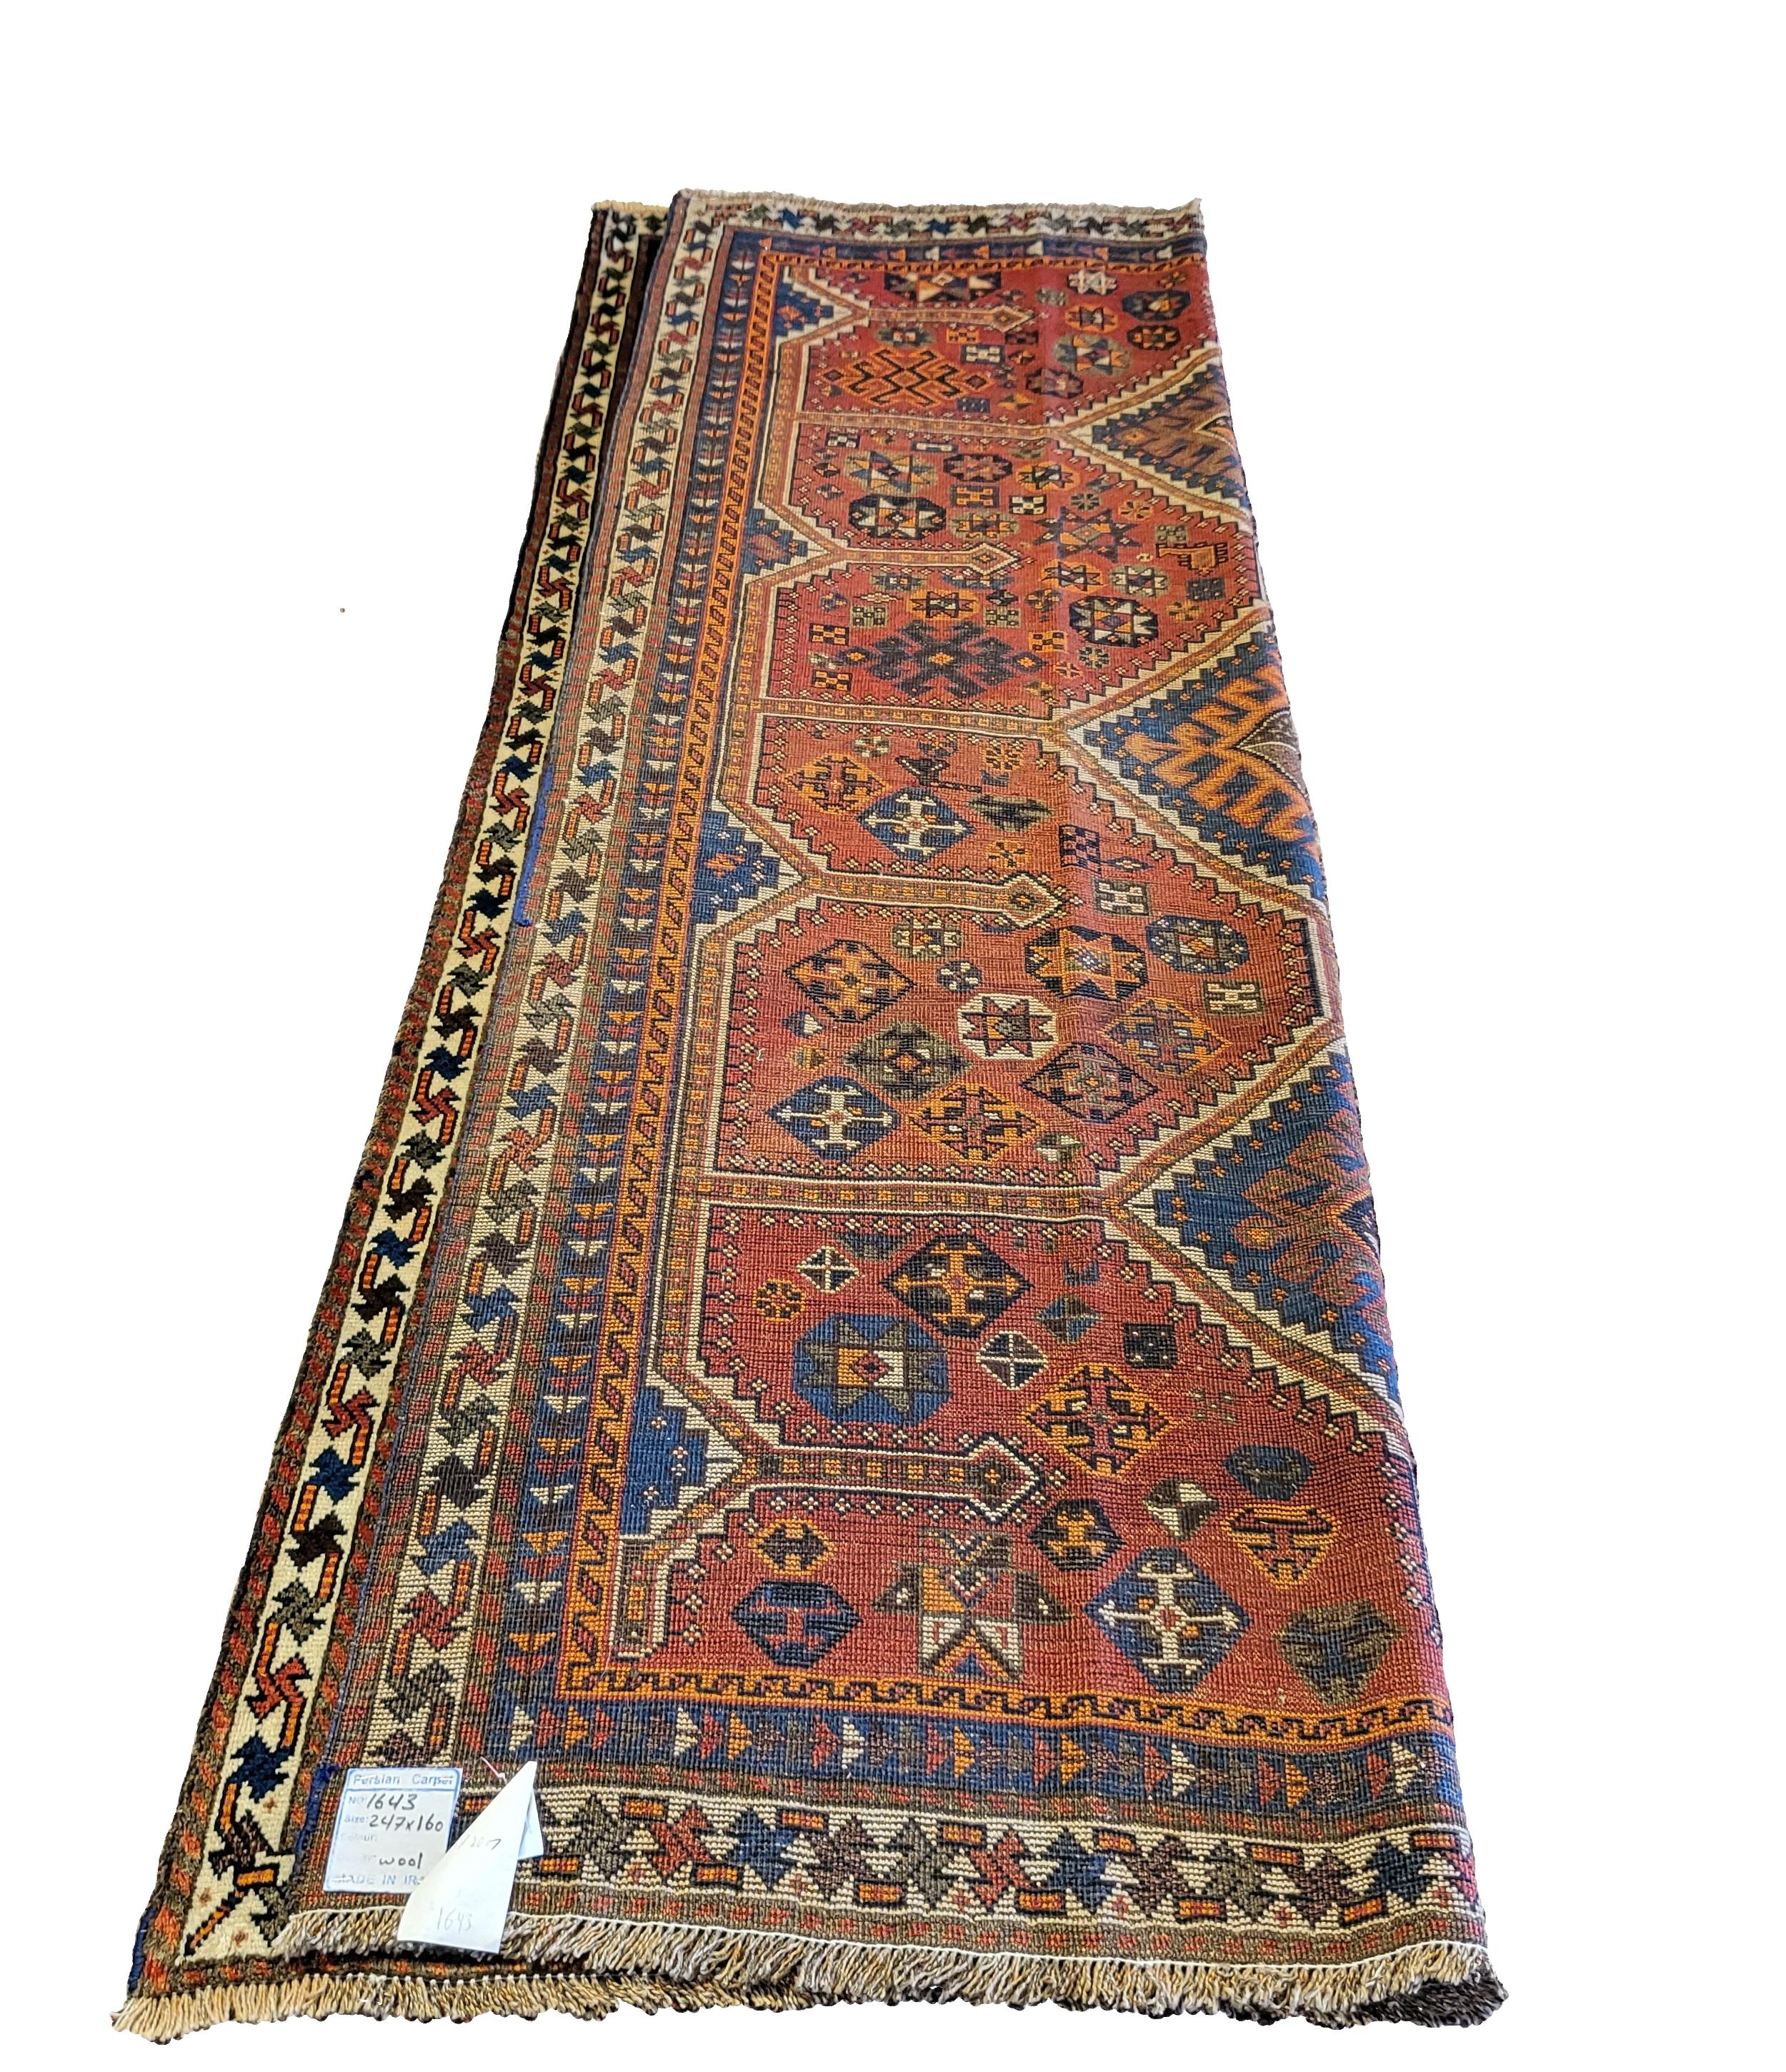 Tribal Antique Persian Lori - Geometric Nomadic Rug - Rust / Orange and Blue For Sale